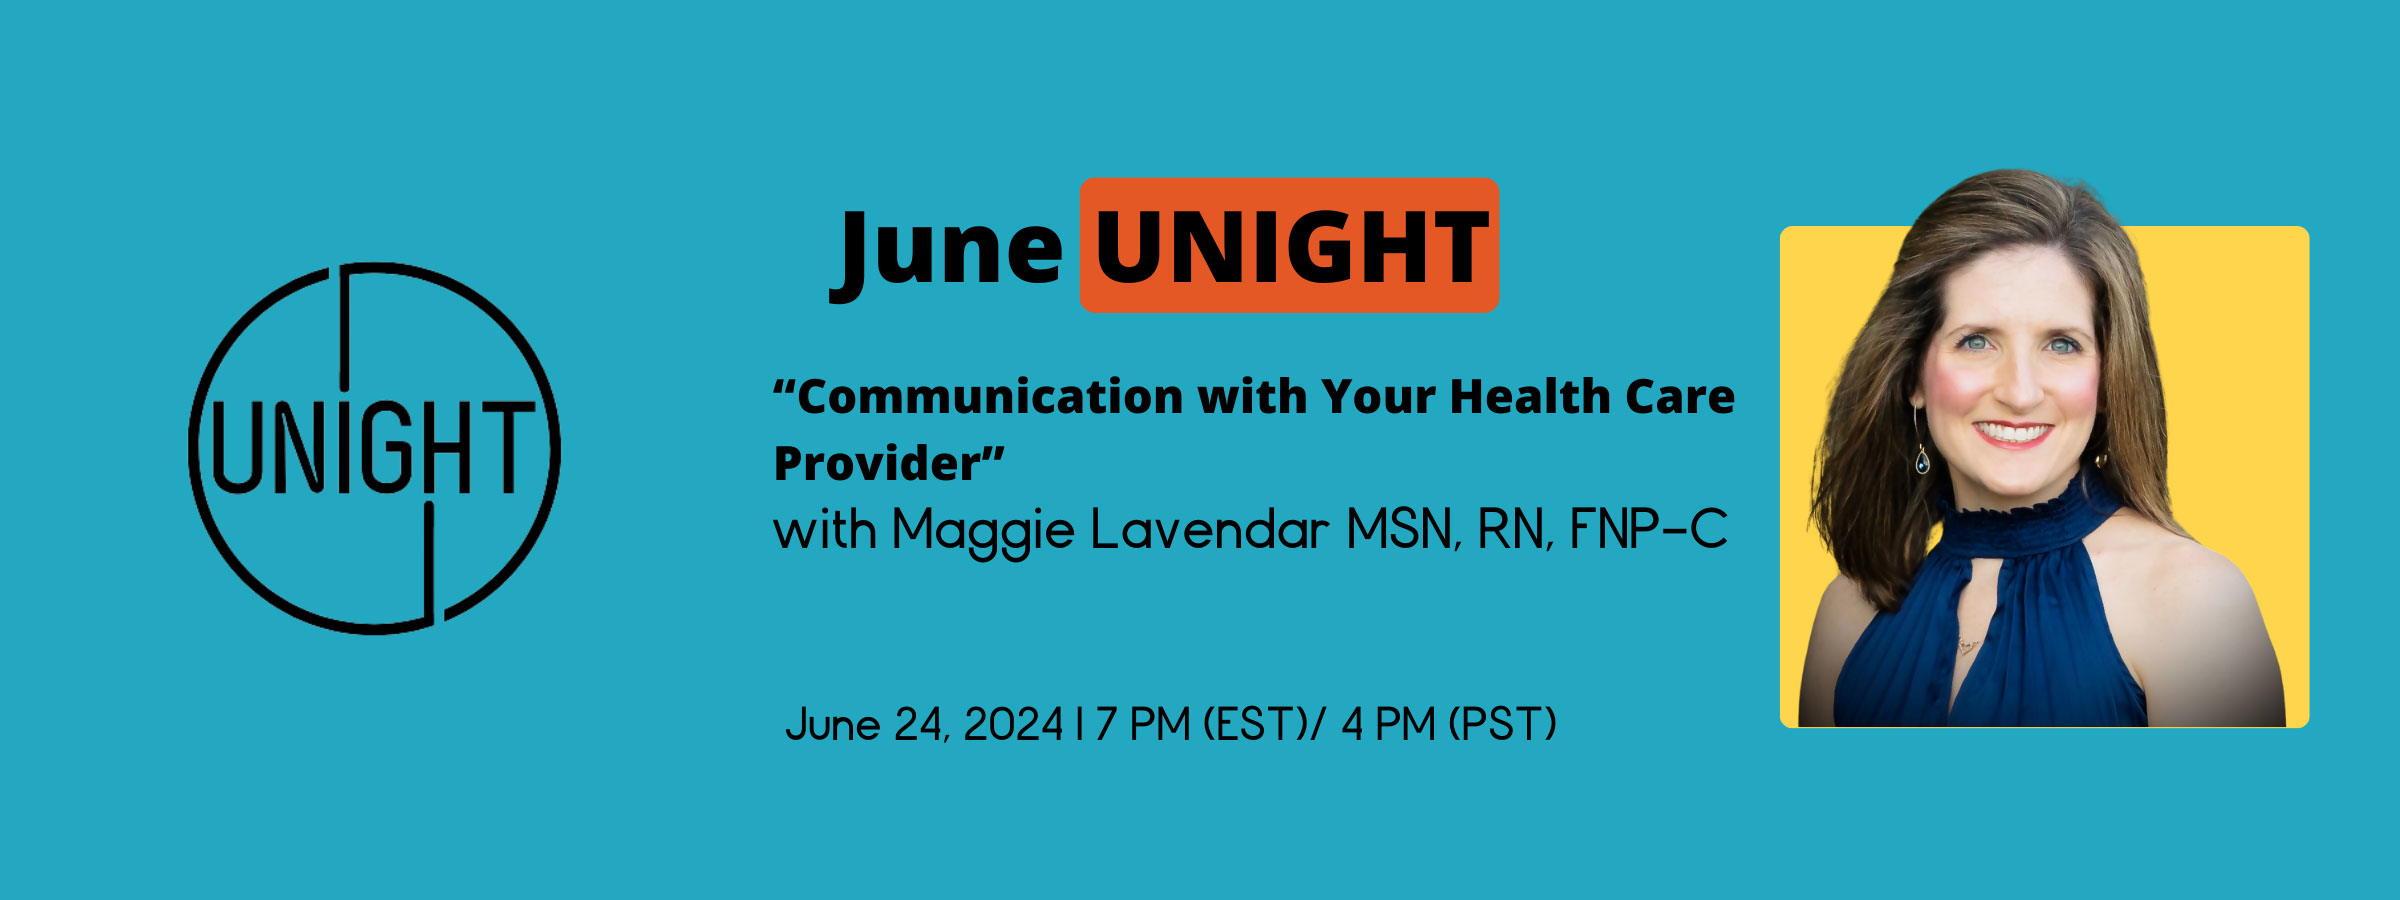 June UNITE | "Communication with Your Health Care Provider" with Maggie Lavendar MSN, RN, FNP-C | June 24, 2024 | 7 PM (EST) / 4 PM (PST)